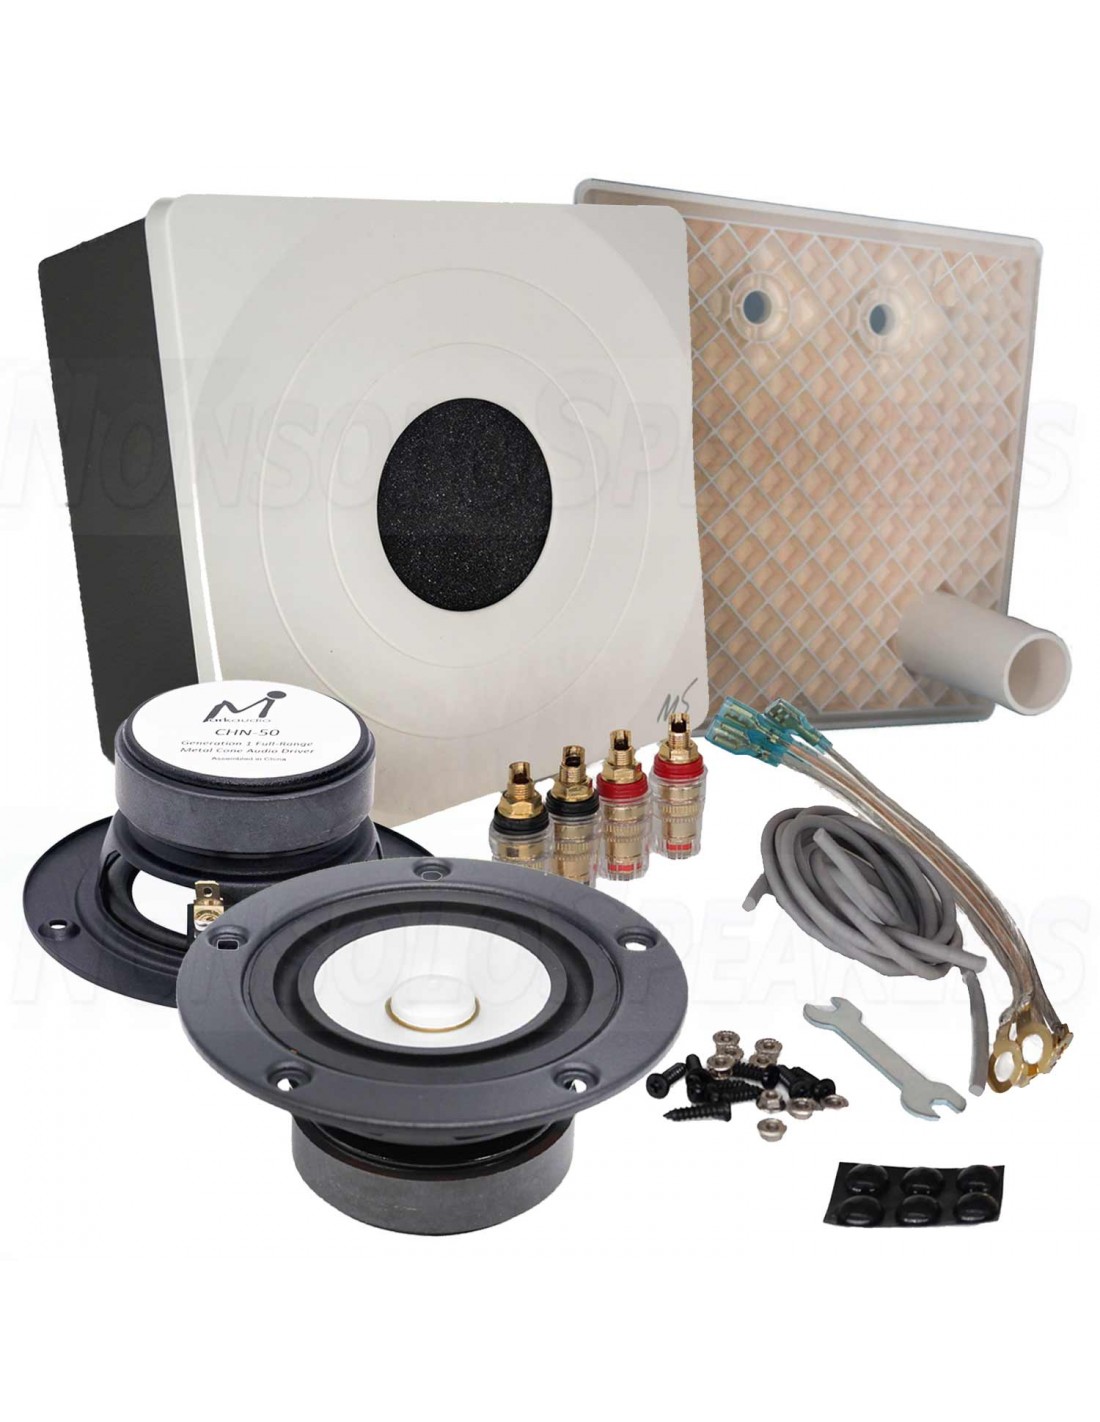 Markaudio One white DIY speaker kit